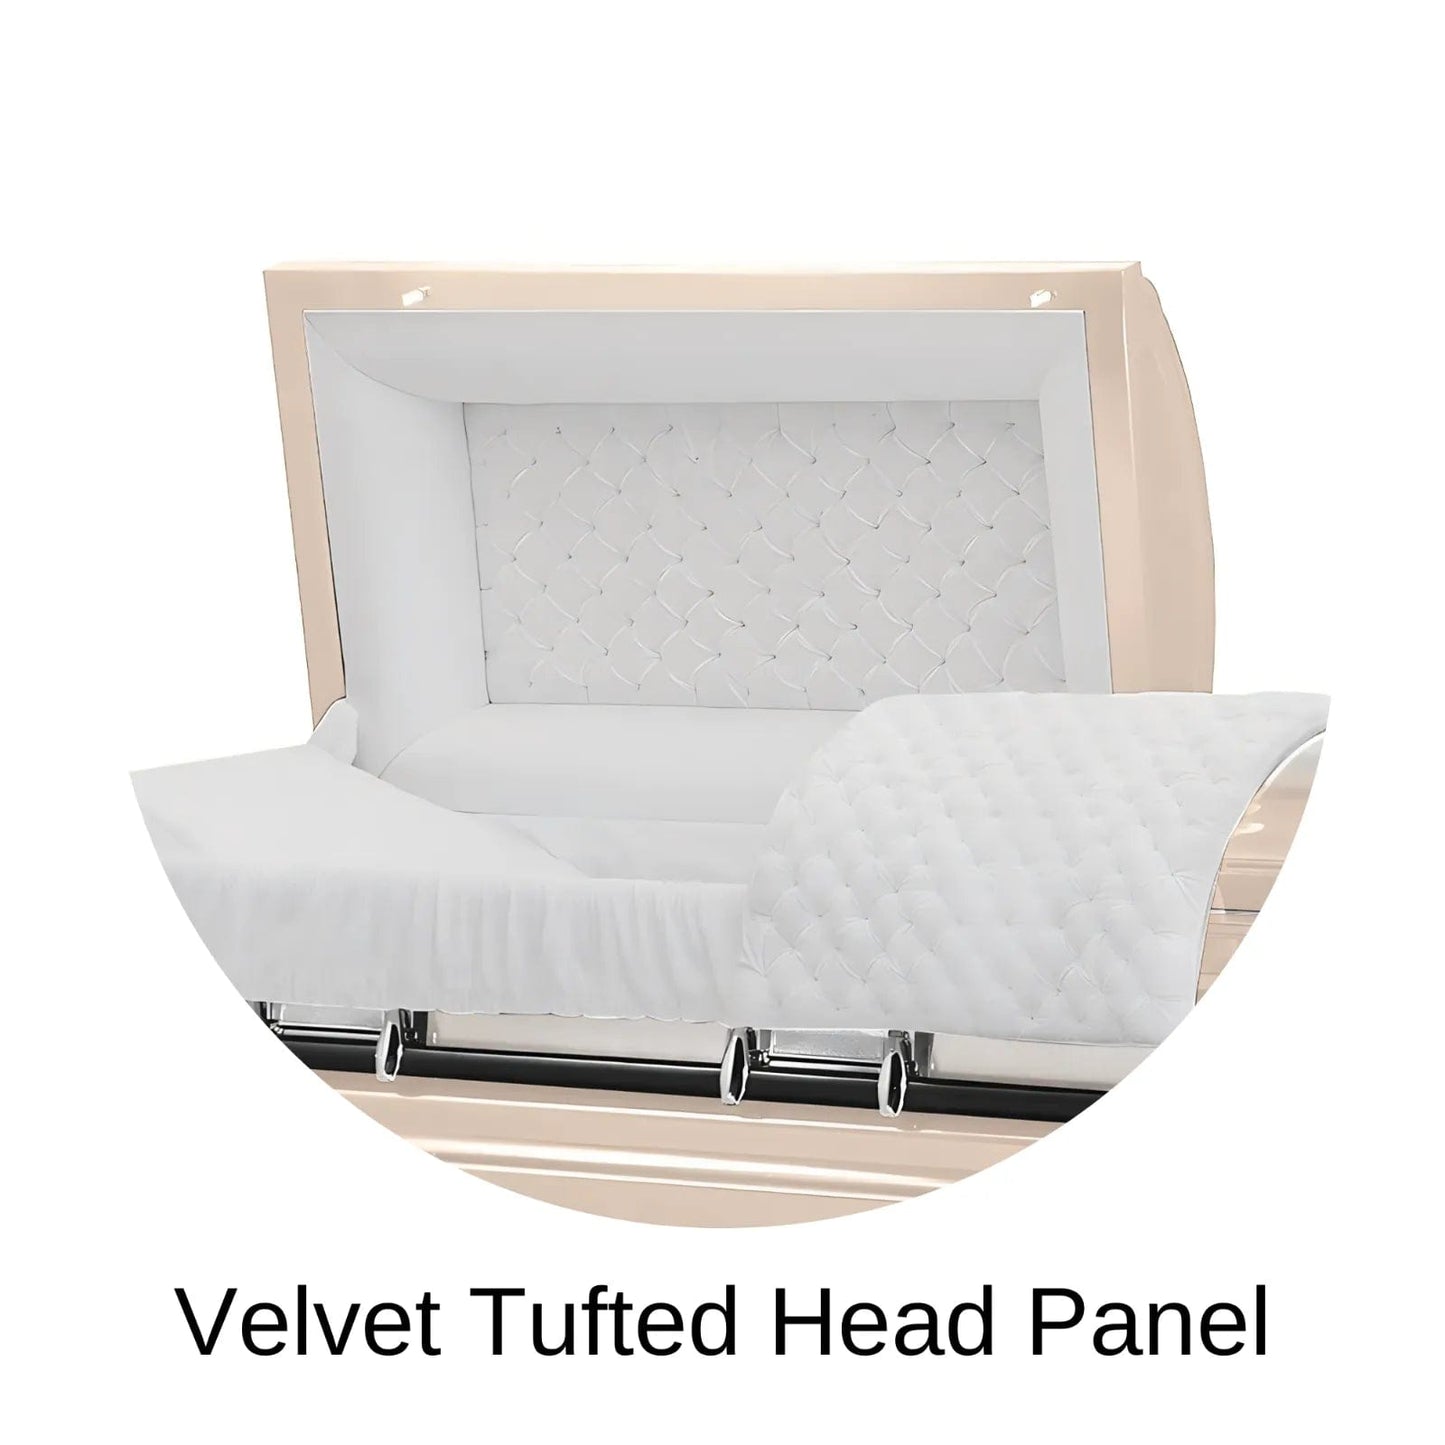 Velvet Tufted head panel of Titan Casket Era Series Casket